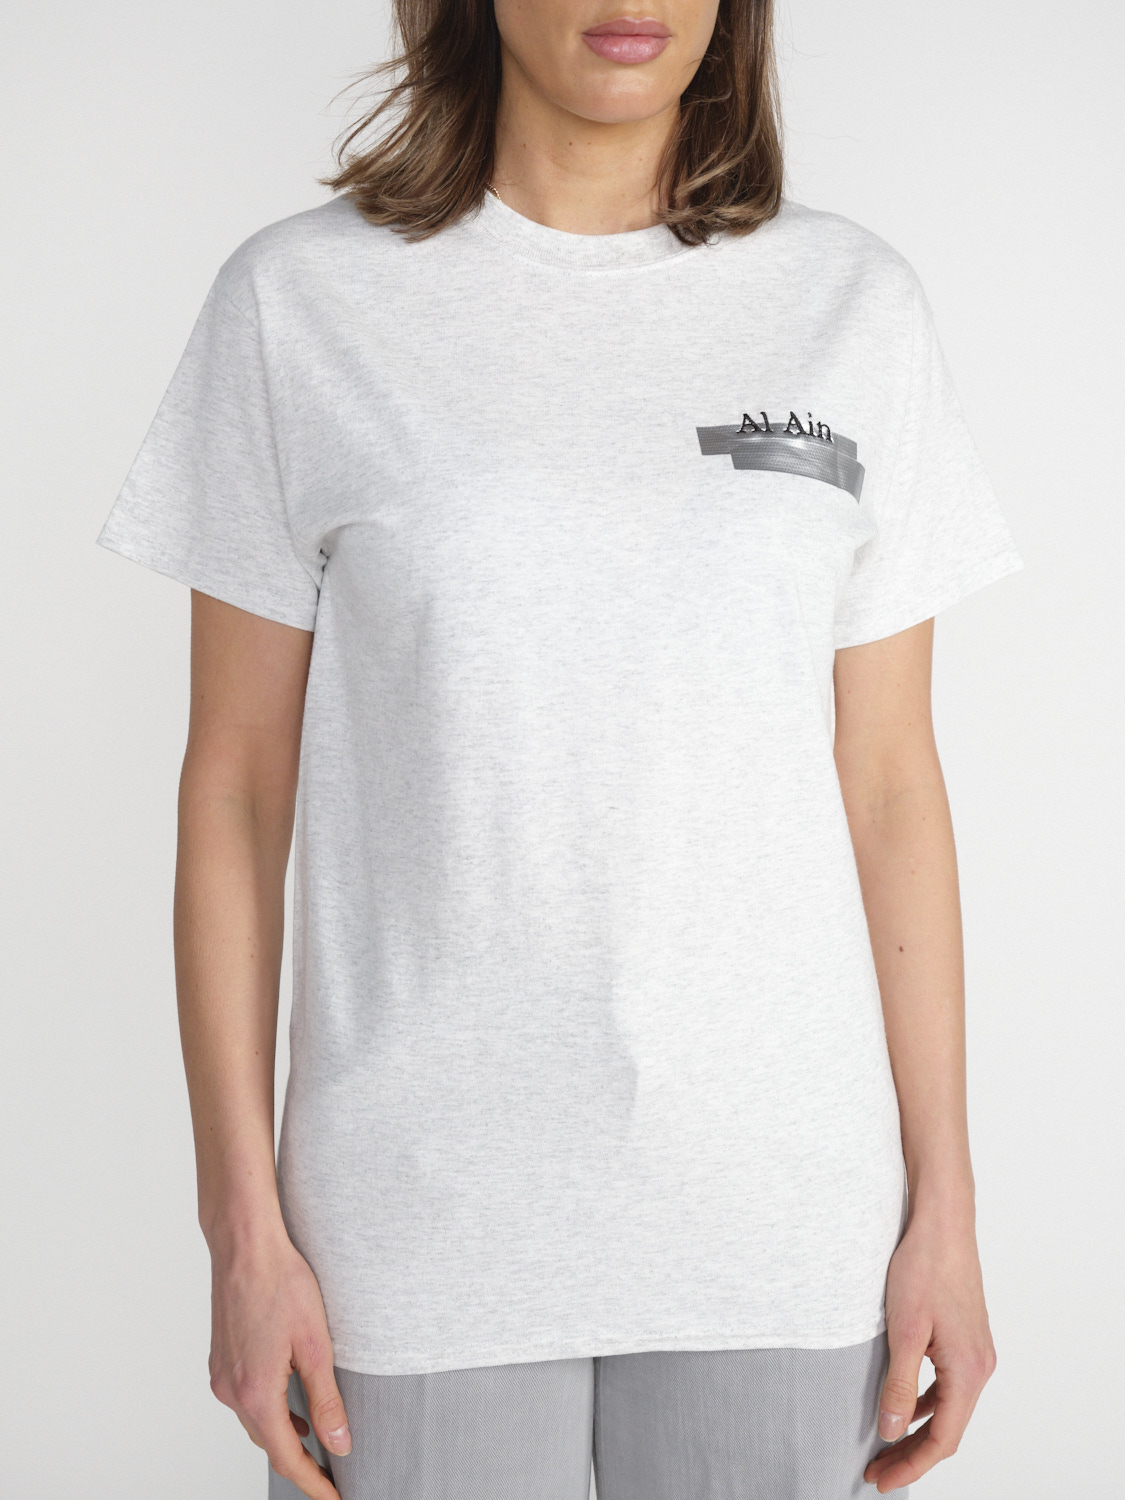 Al Ain T-Shirt with pattern  grey XS/S